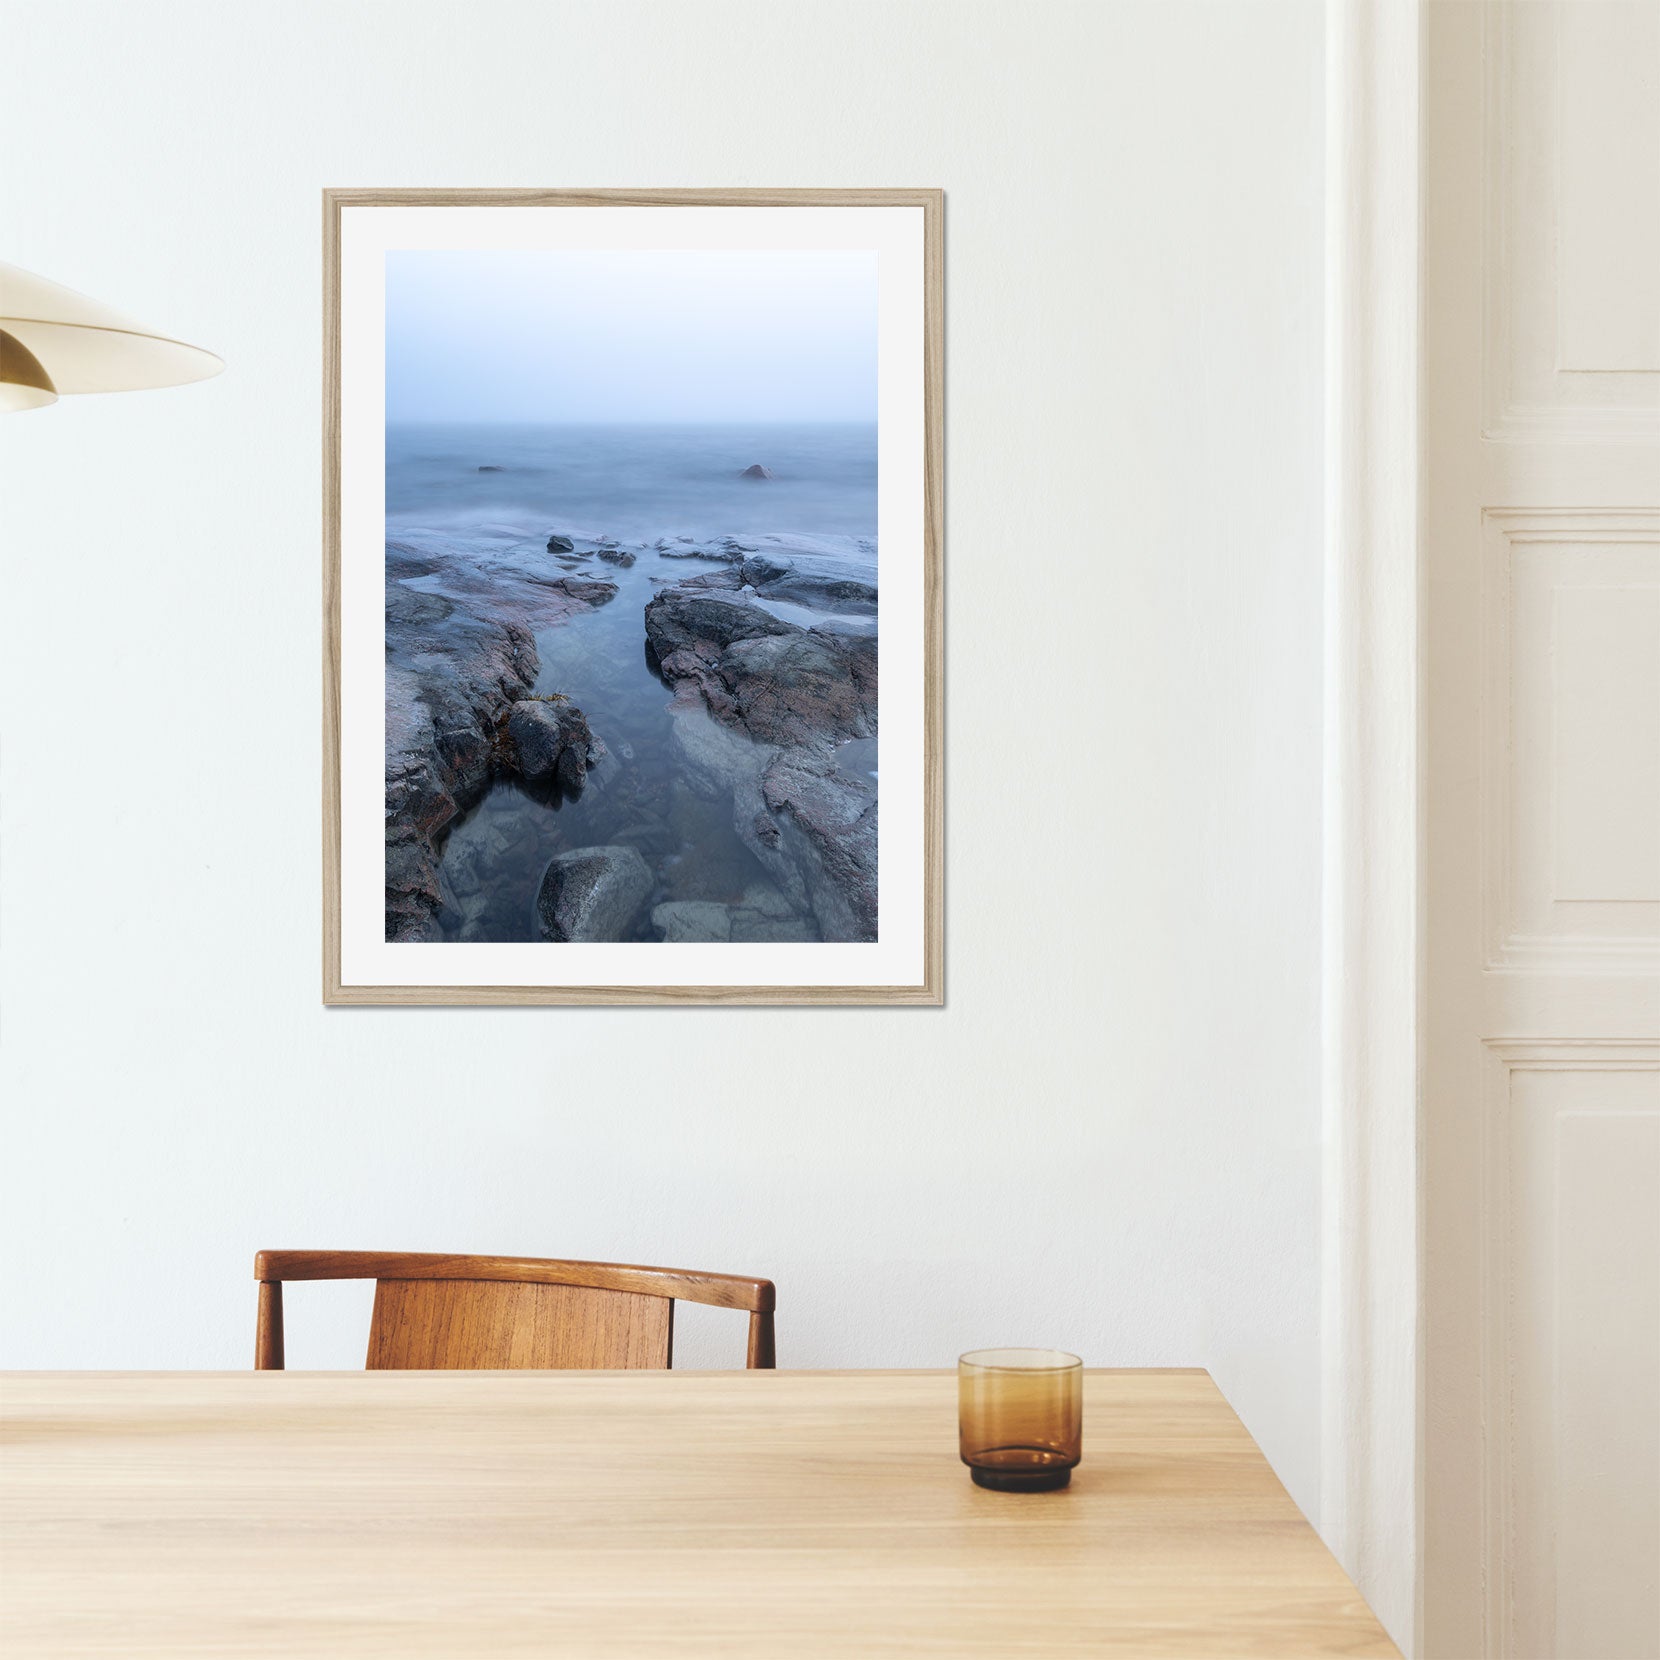 A framed print of a rocky coastline in fog